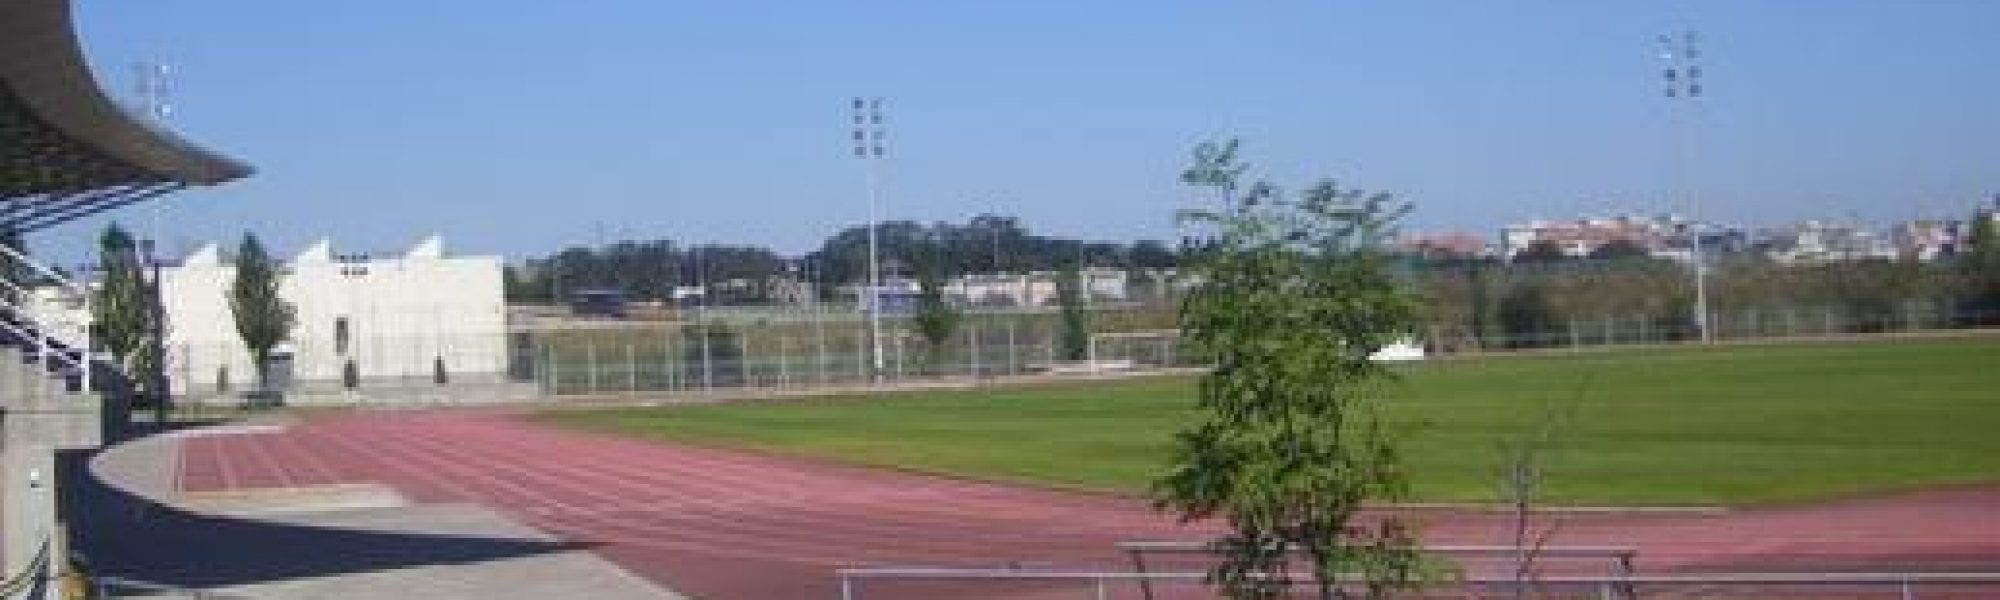 Estado actual de la pista de atletismo de Elviña, cuyo pavimento se renovará con Sportflex SX 720.